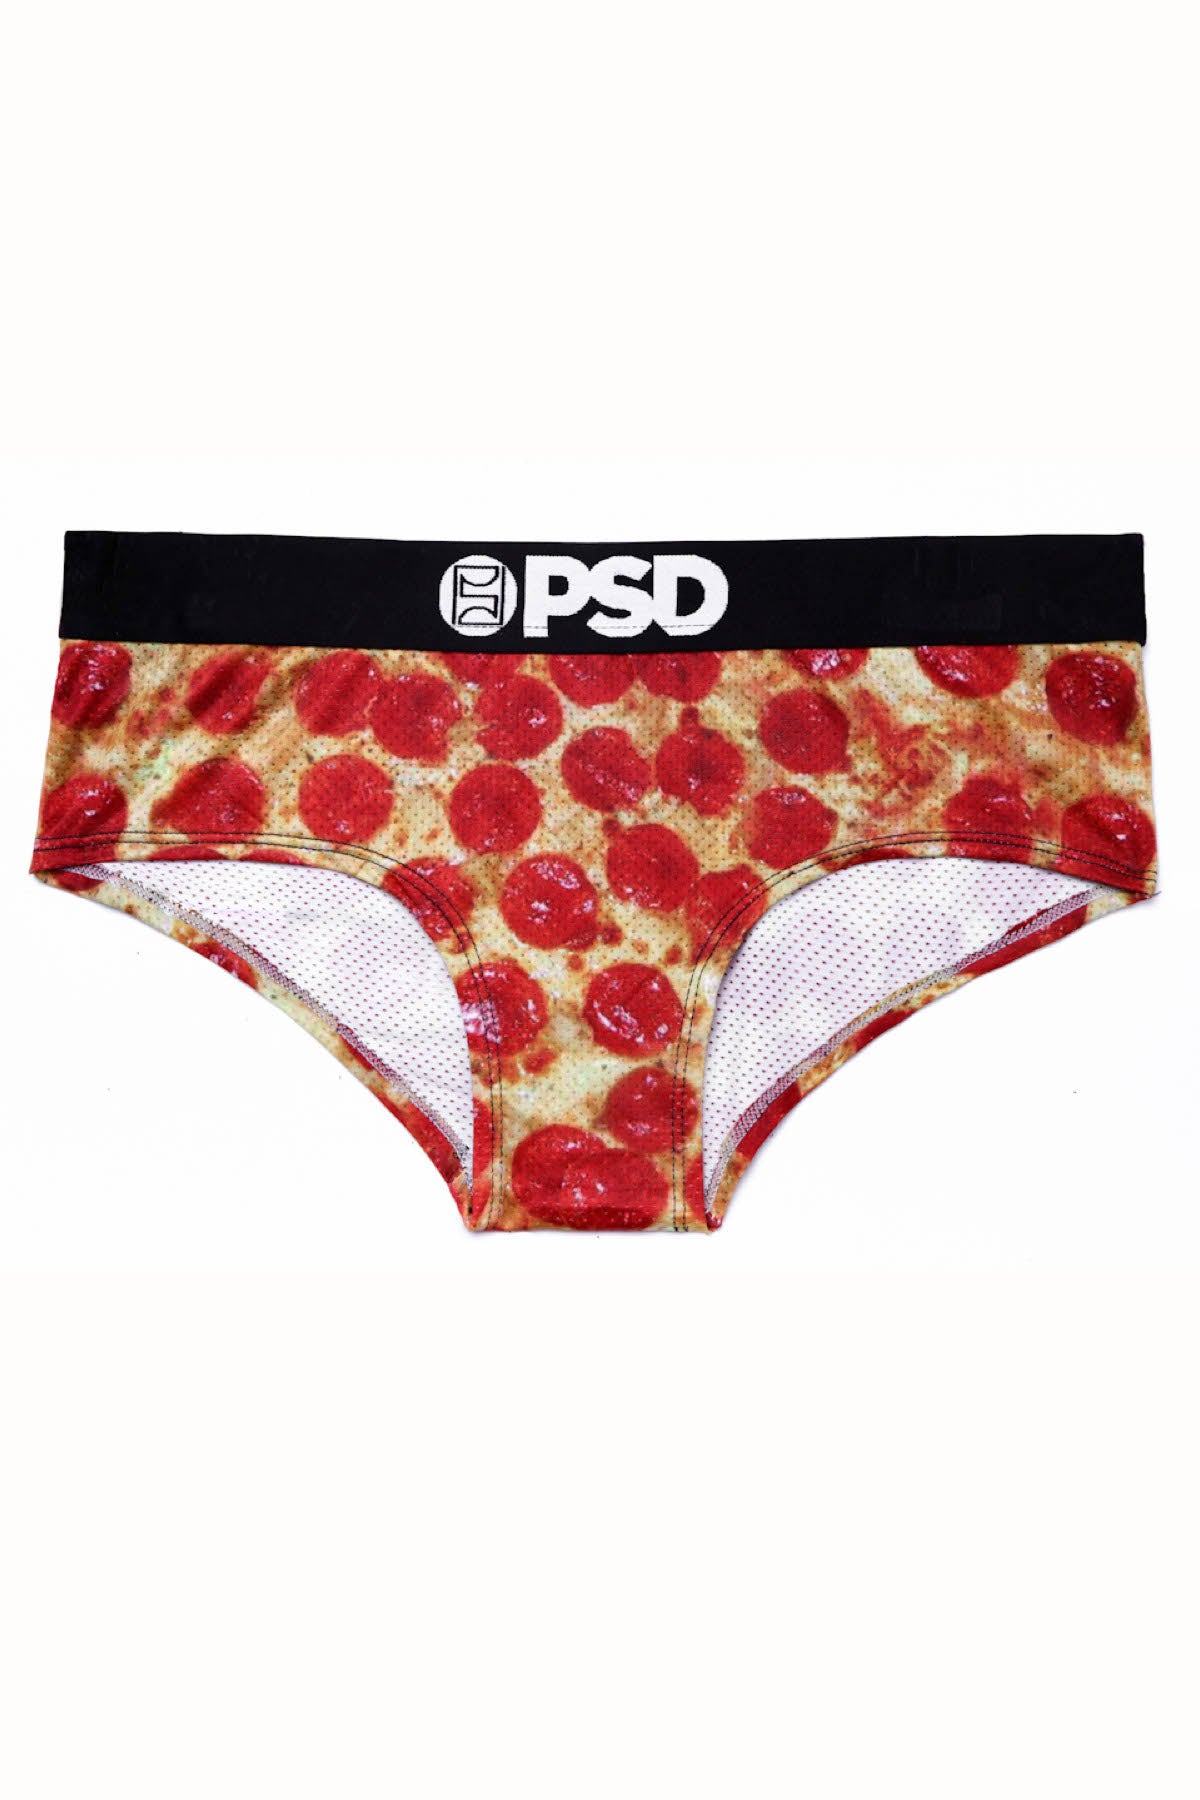 PSD Pizza Classic Brief